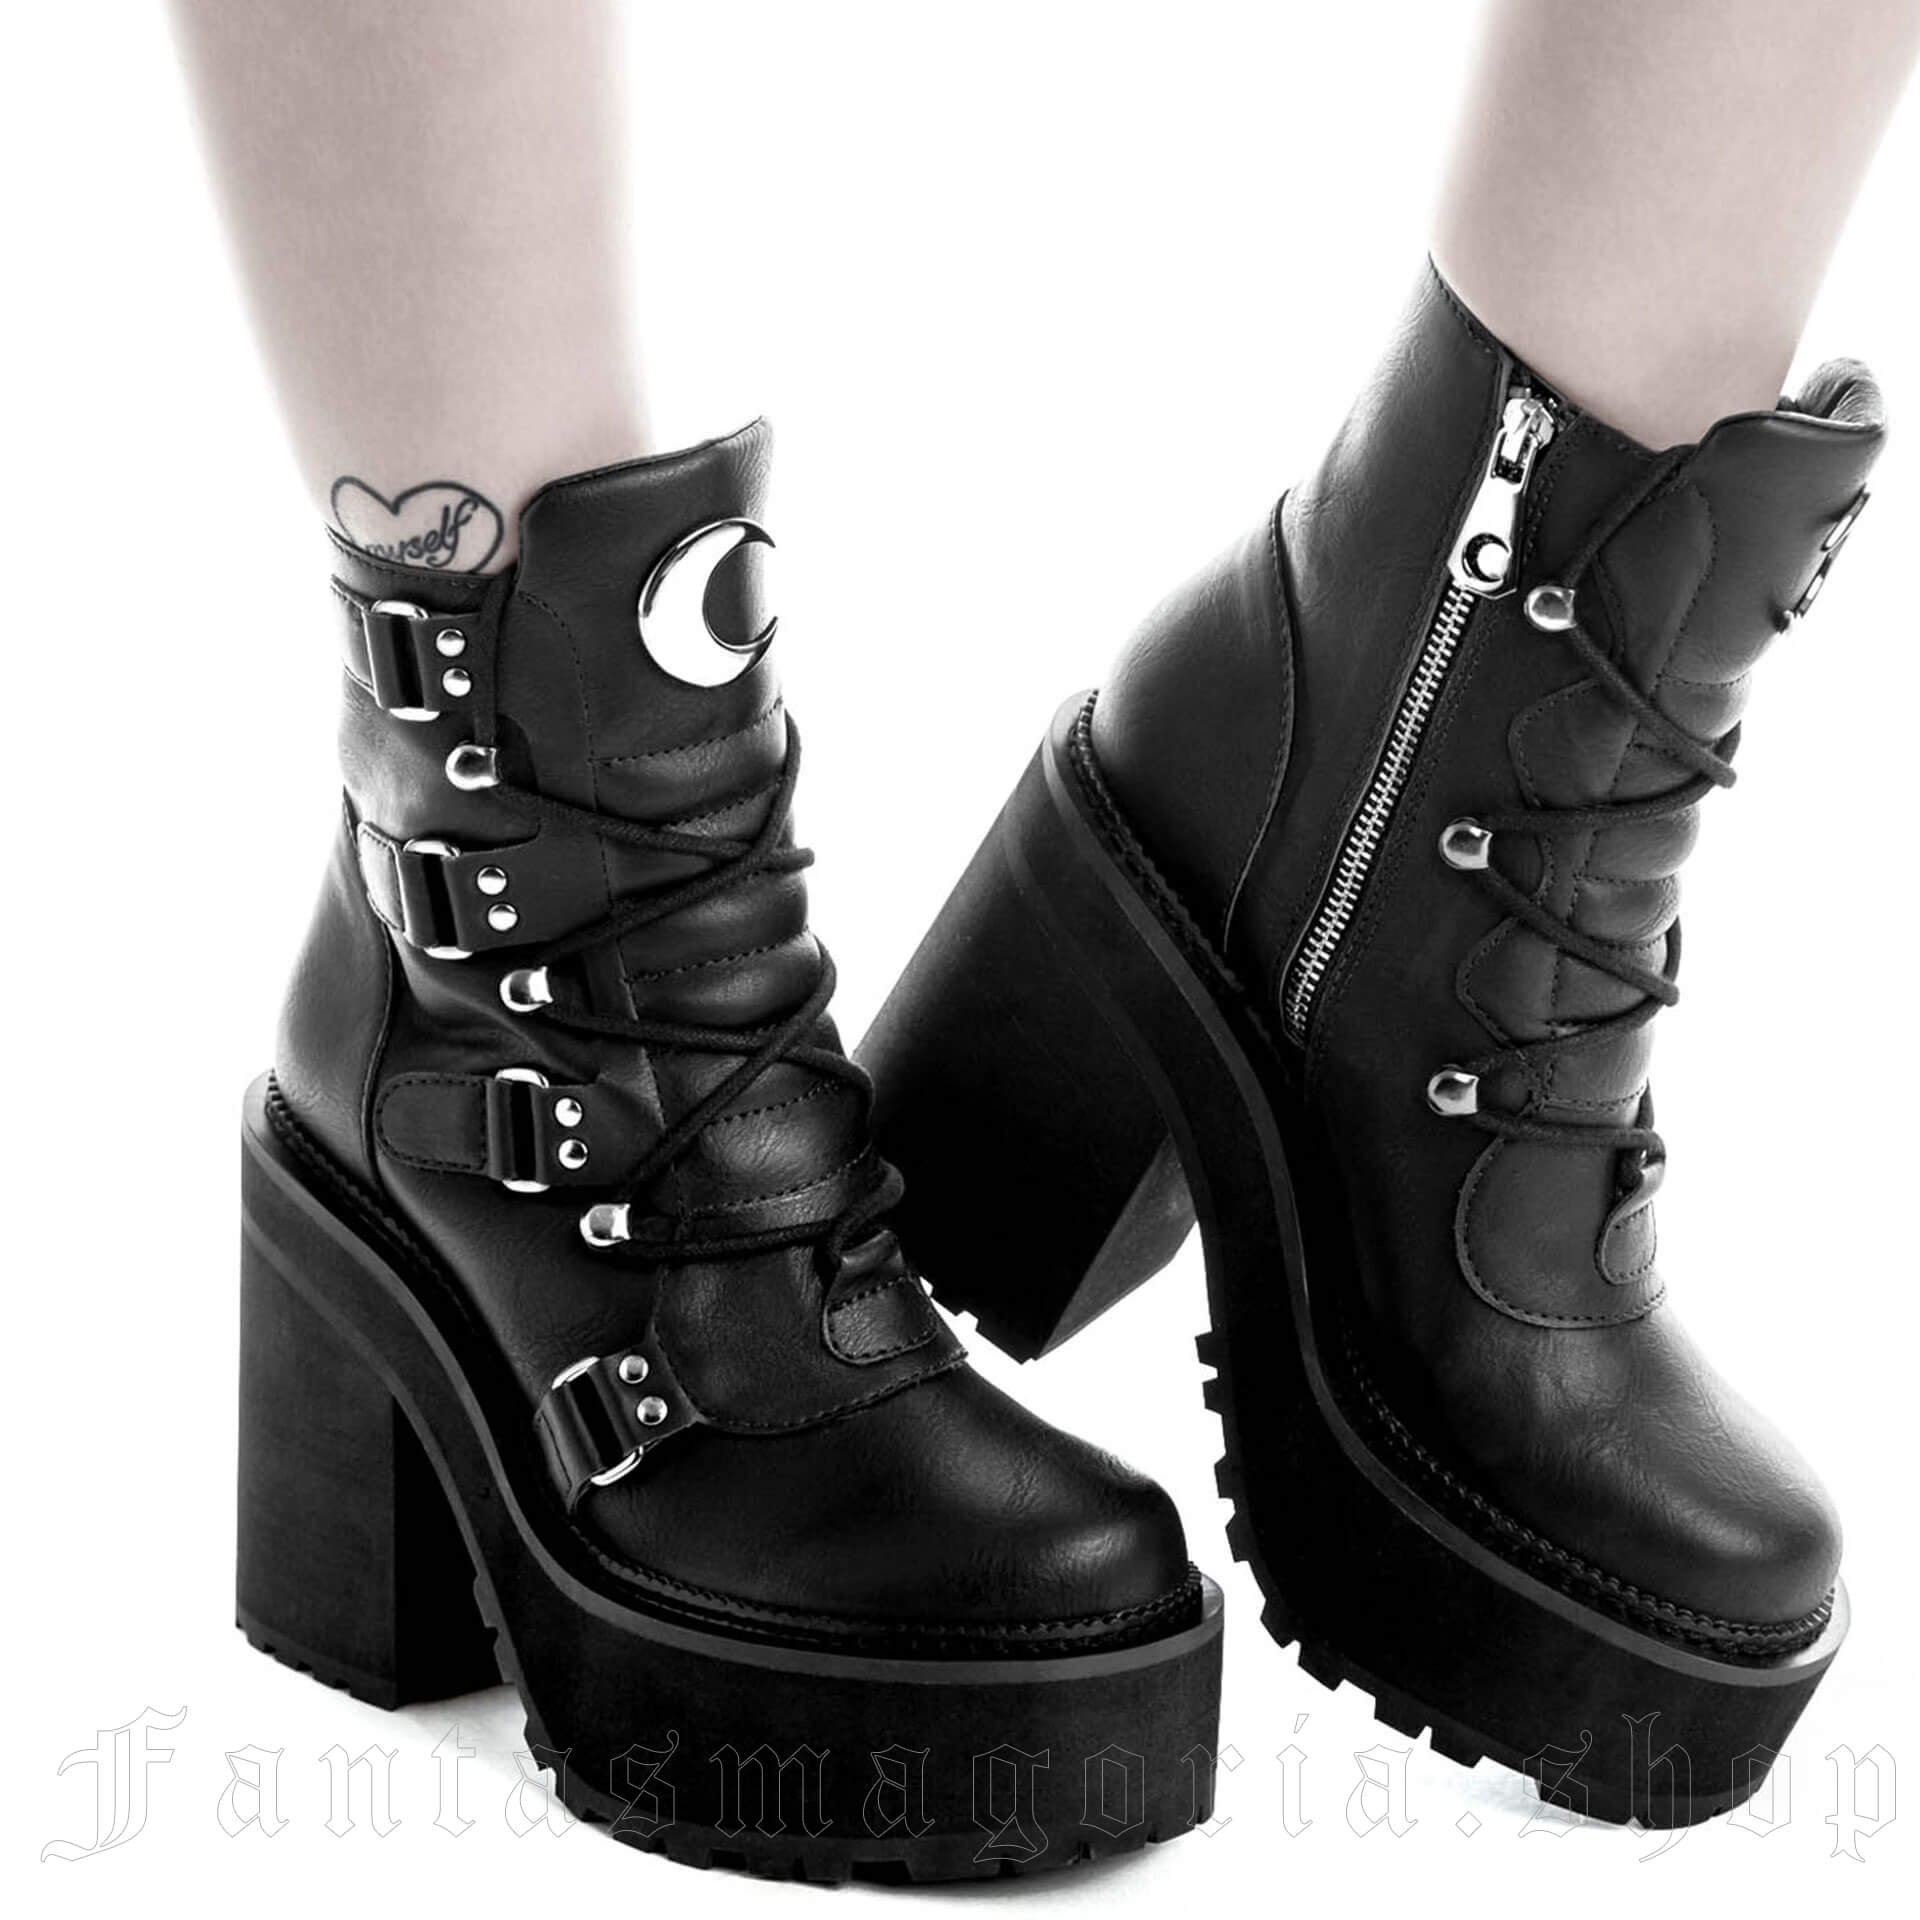 Synthetic leather, high heel platform ankle boots by Killstar. - Killstar - K-FTW-F-2882